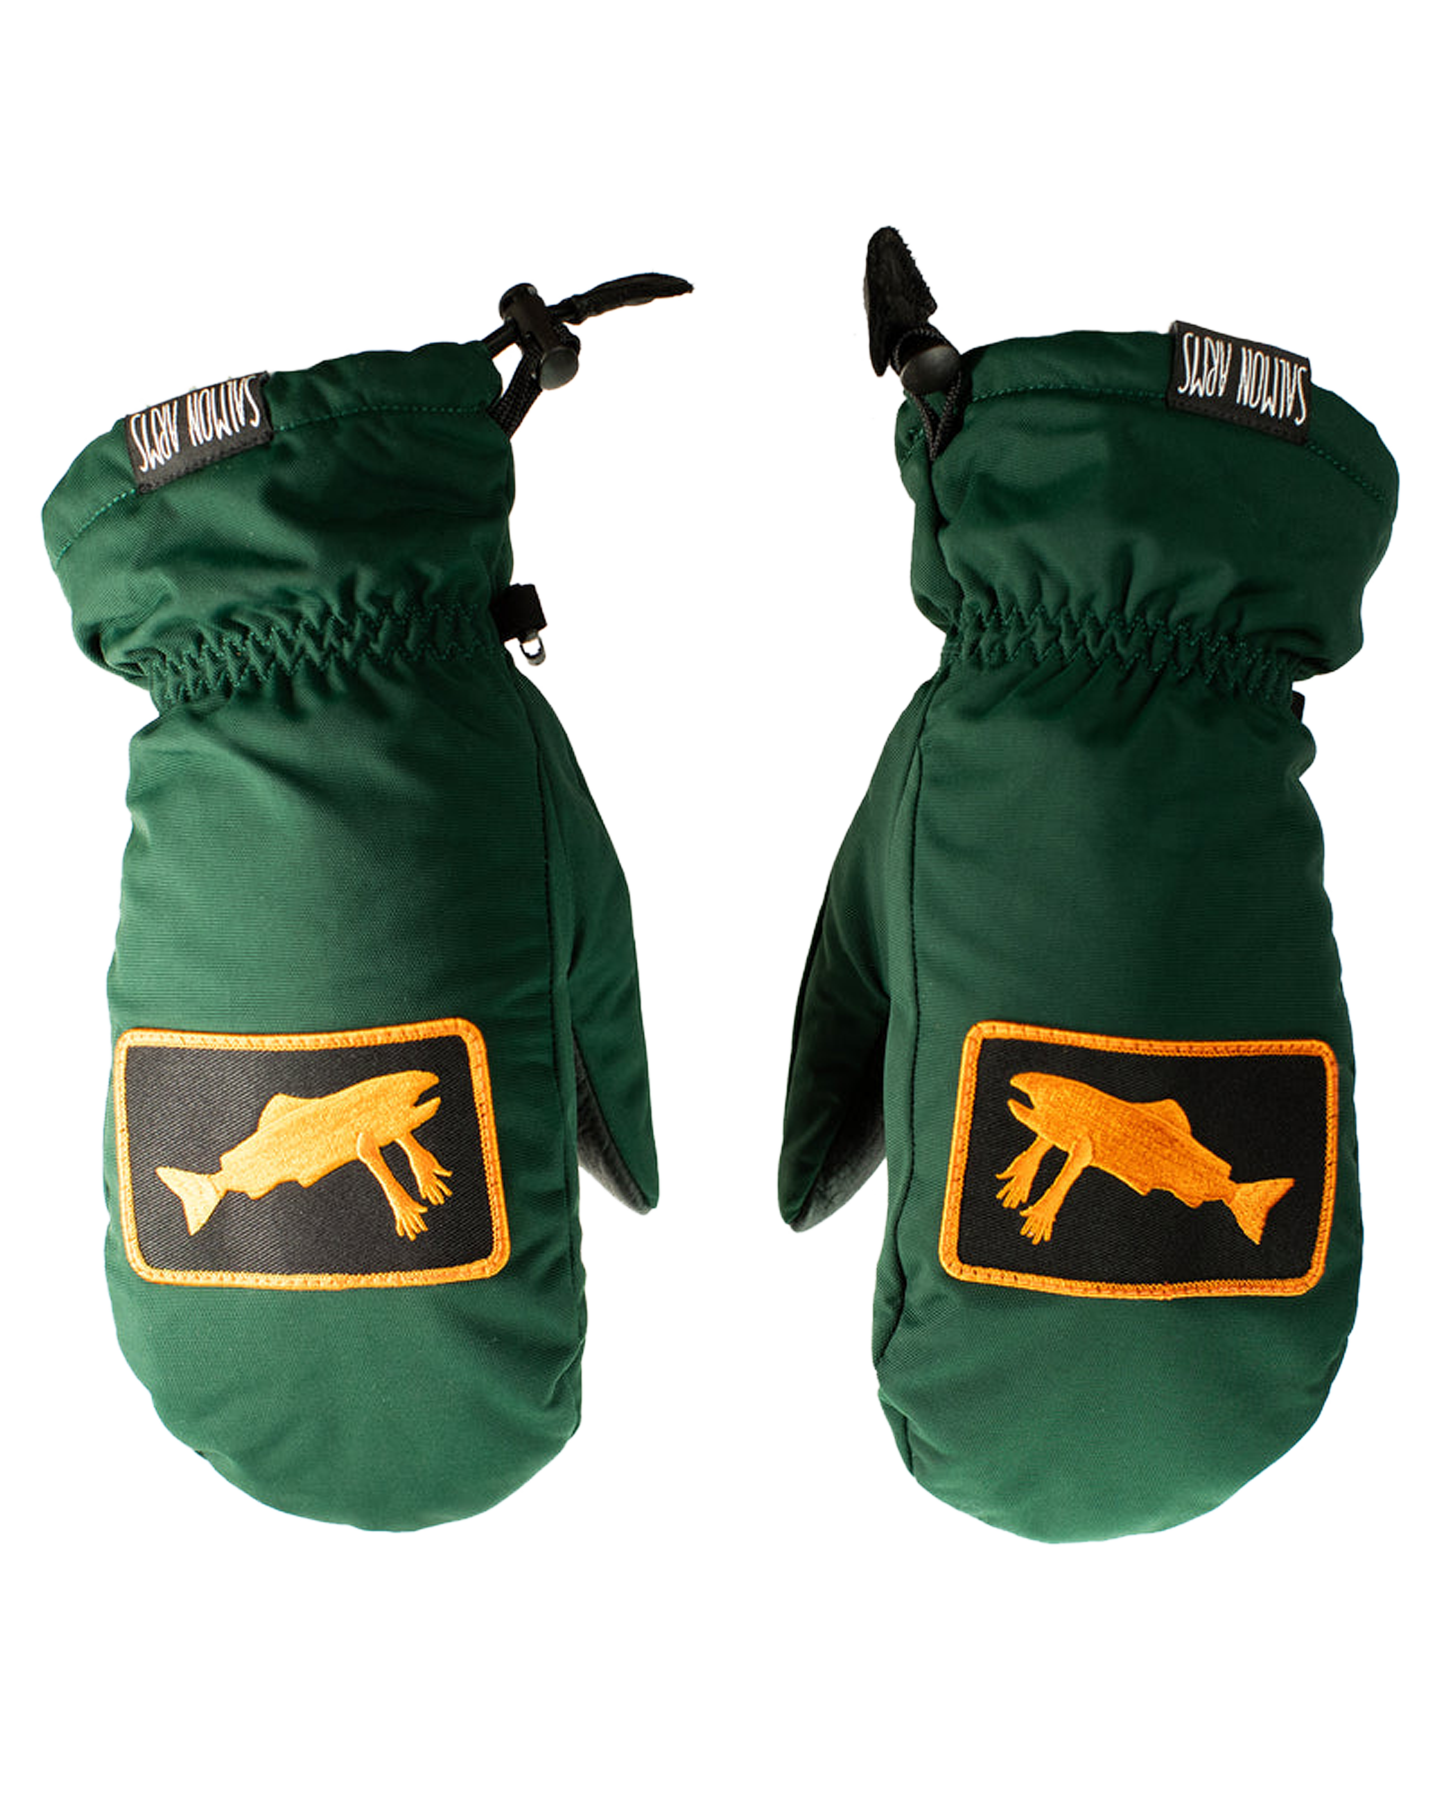 Salmon Arms Classic Snow Mitt - Logo Green/Orange Men's Snow Gloves & Mittens - SnowSkiersWarehouse